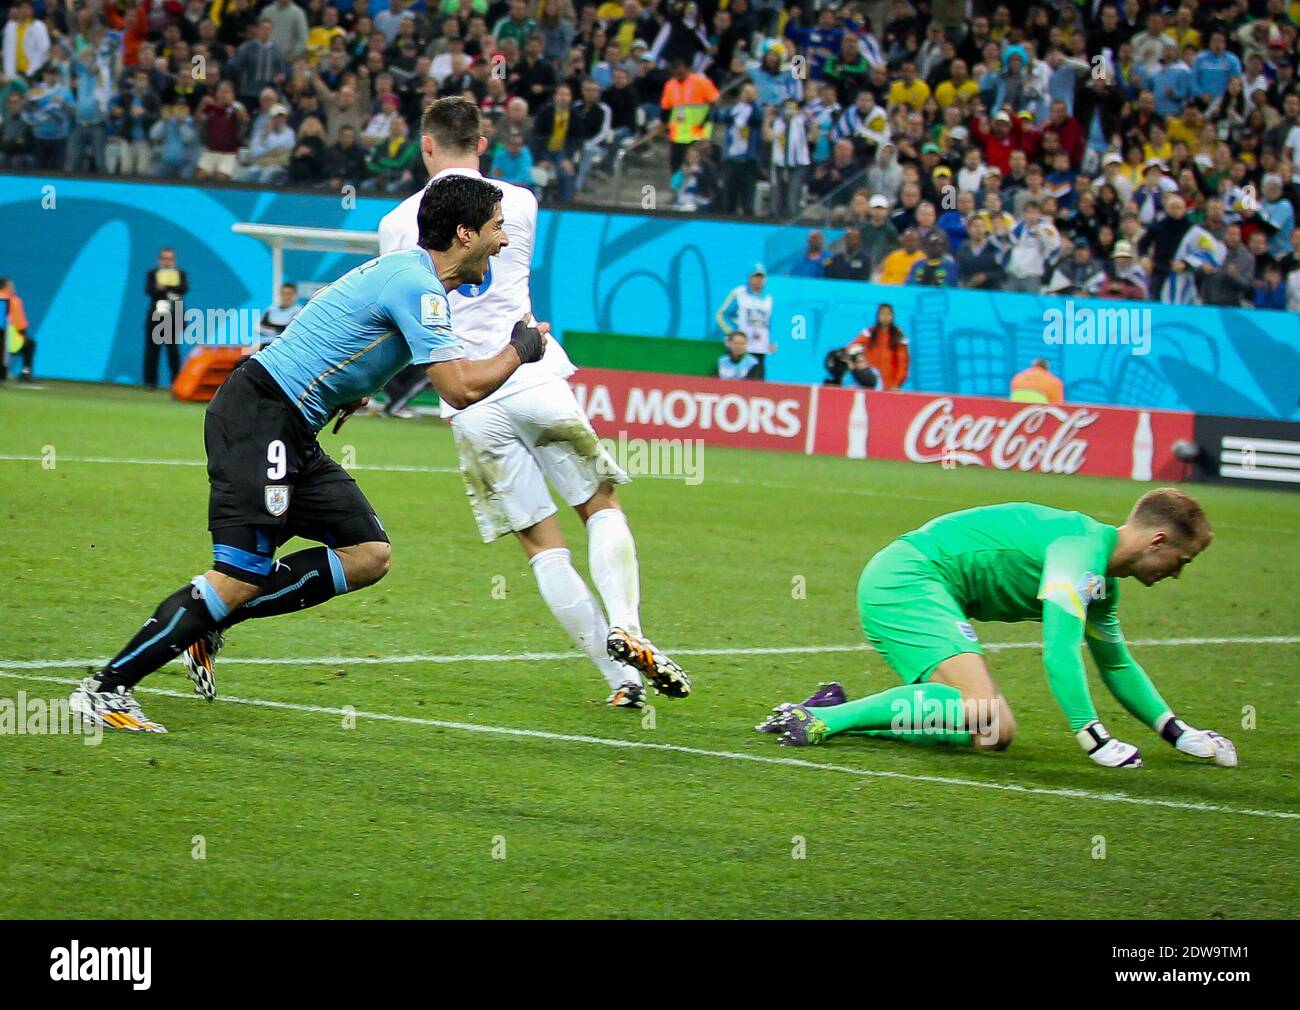 Luis Suarez scores the 2-1 winning goal during the Group D match England v Uruguay the Estadio do Sao Paulo, Sao Paulo, Brazil, Thursday June 19, 2014. Photo by Giuliano Bevilacqua/ABACAPRESS.COM Stock Photo